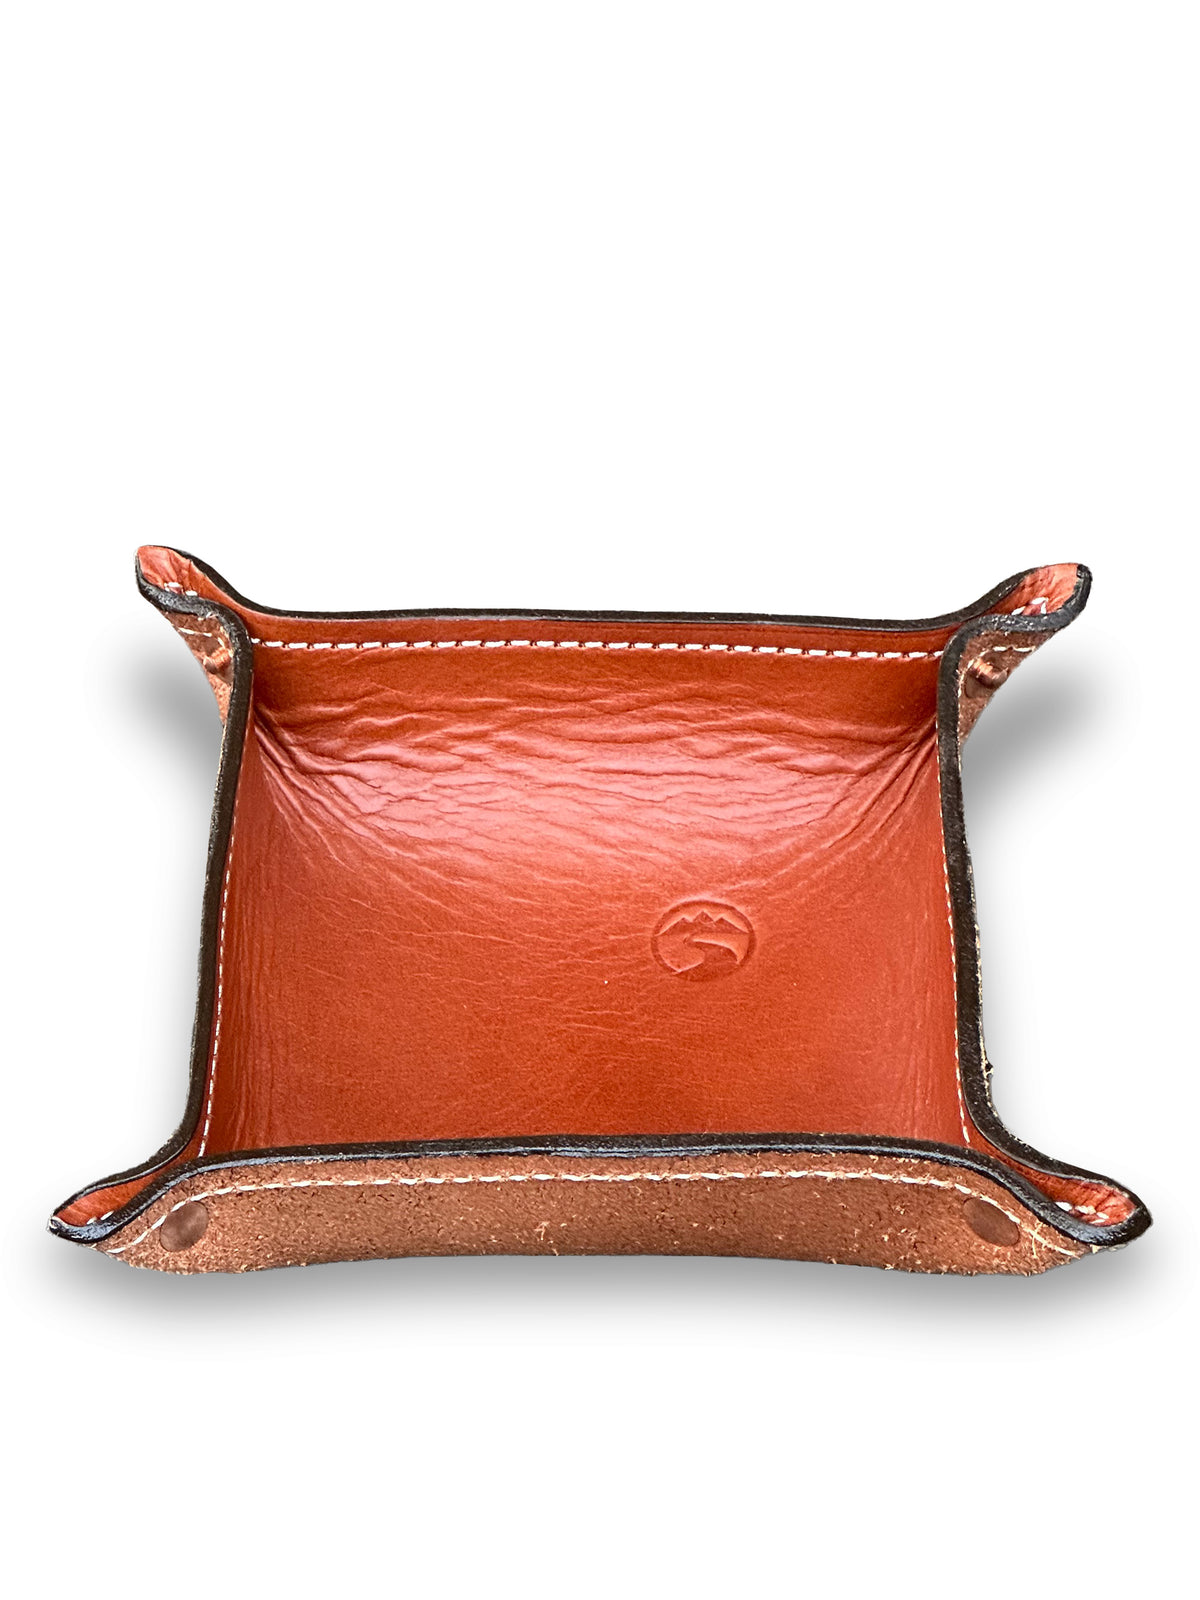 Premium Leather Valet Tray in Chestnut